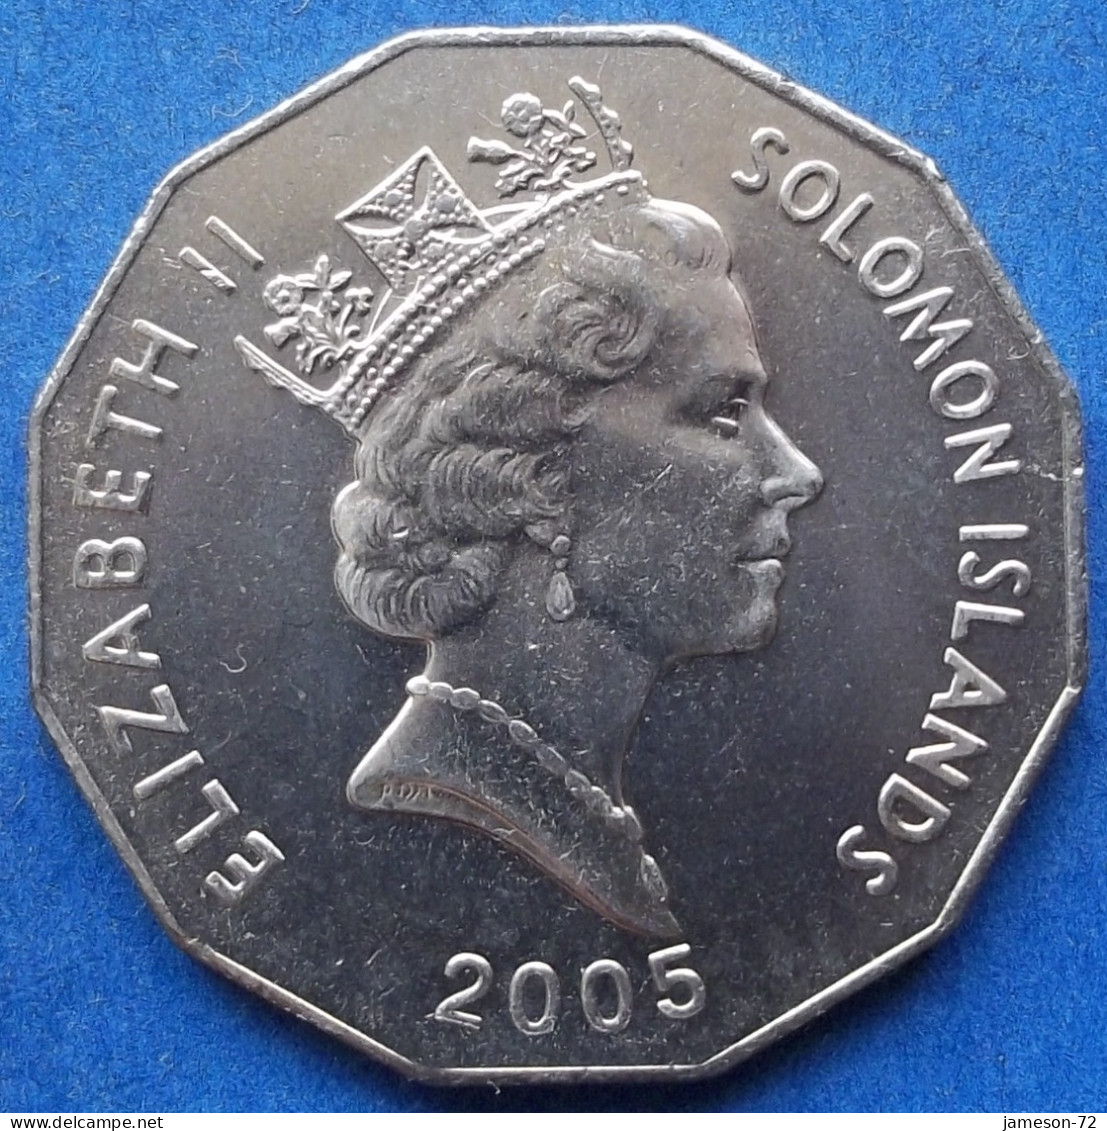 SOLOMON ISLANDS - 50 Censt 2005 "Arms" KM# 29 Commonwealth Nation, Elizabeth II - Edelweiss Coins - Solomon Islands